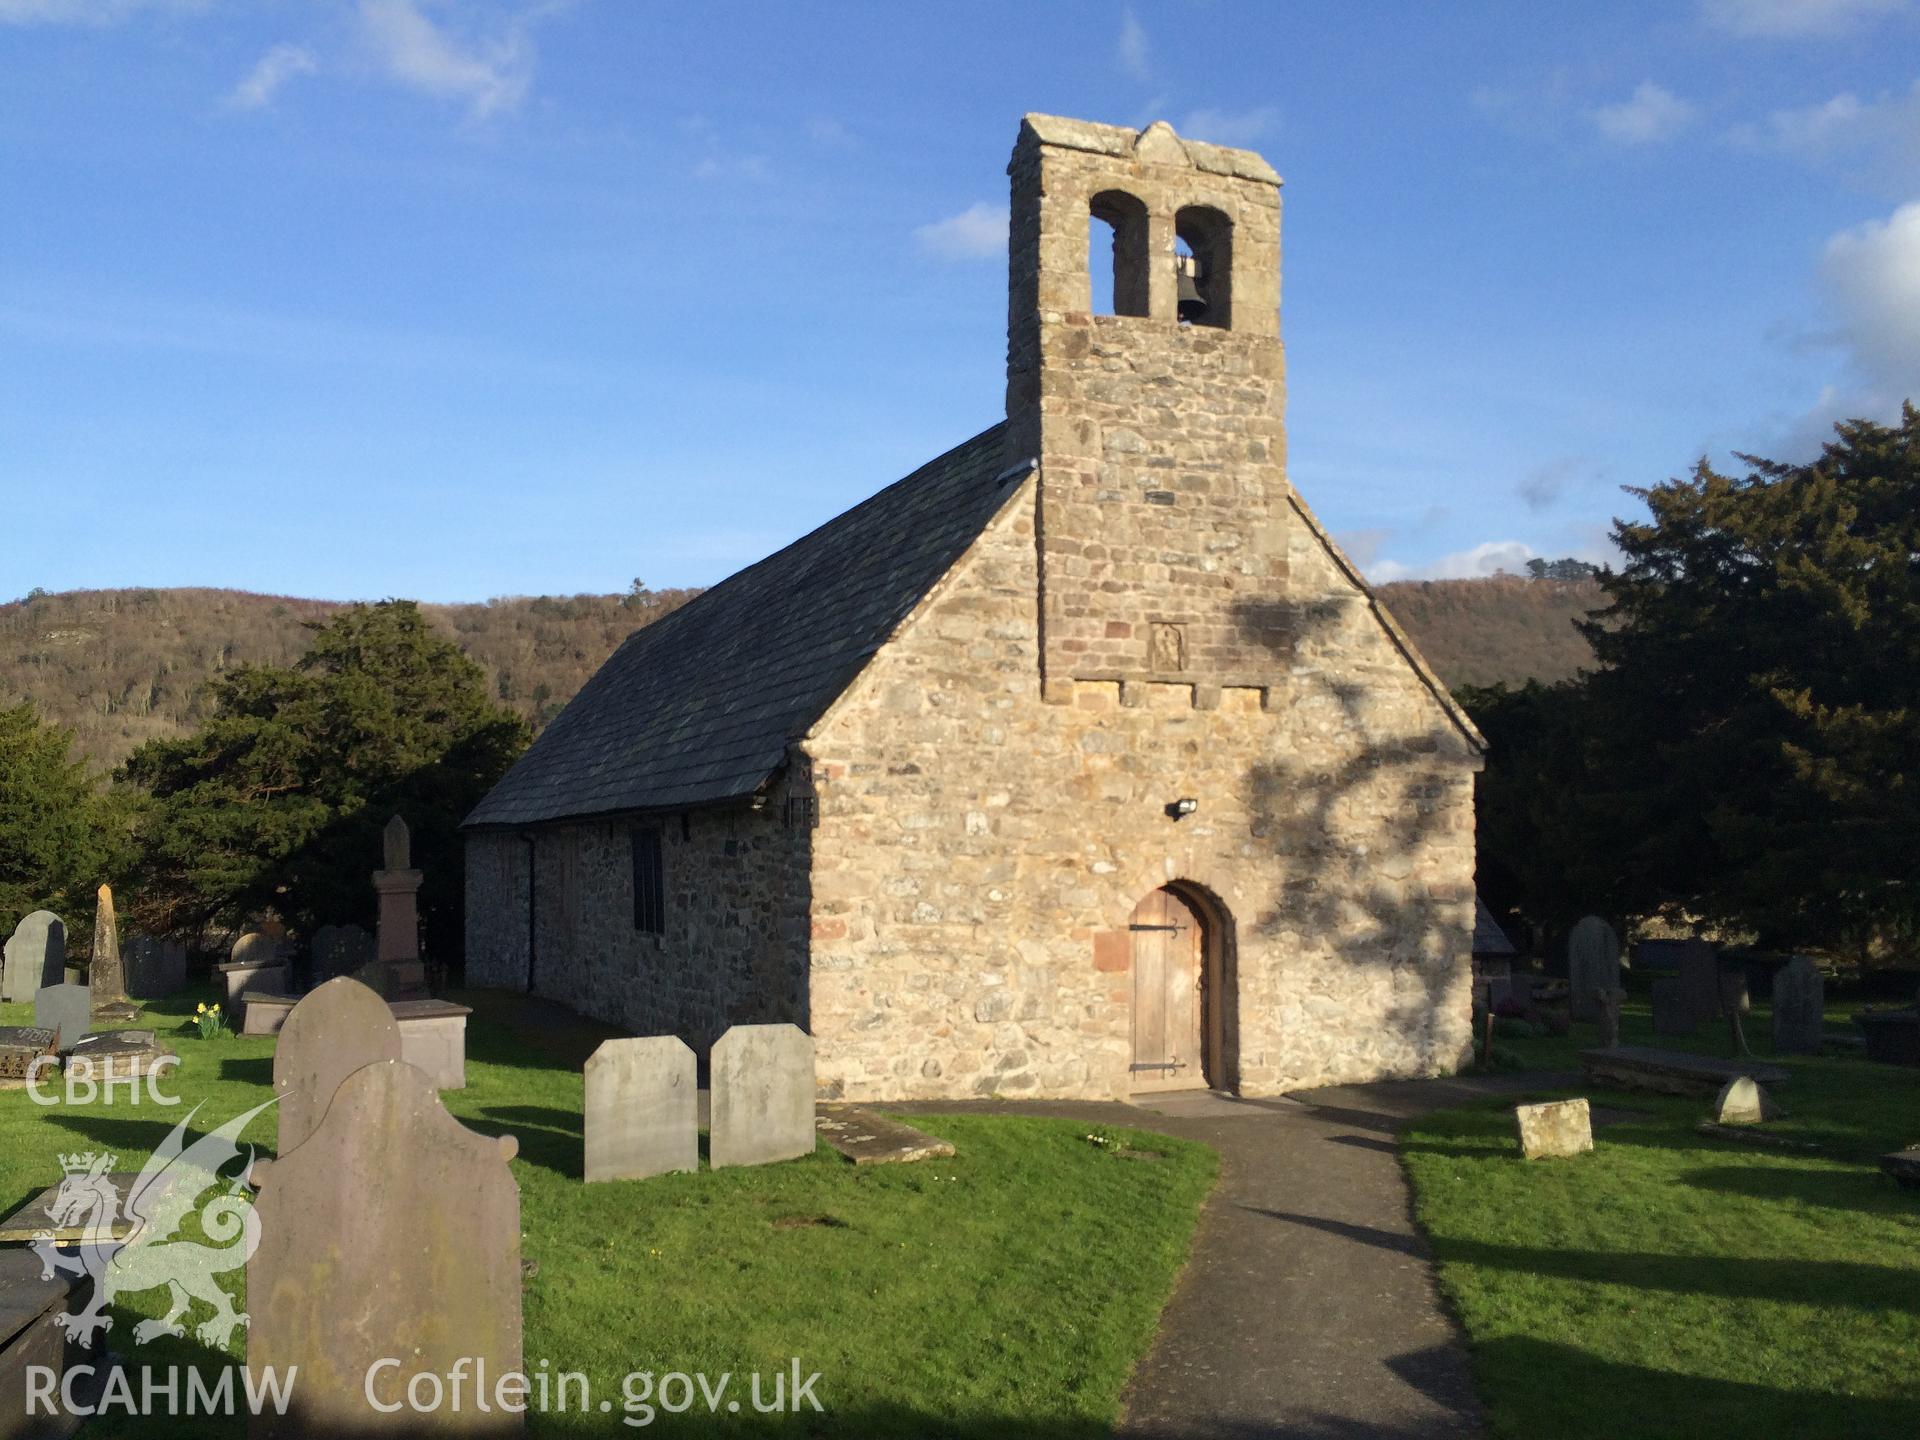 Colour photo showing Caerhun Church, produced by Paul R. Davis, 14th March 2017.